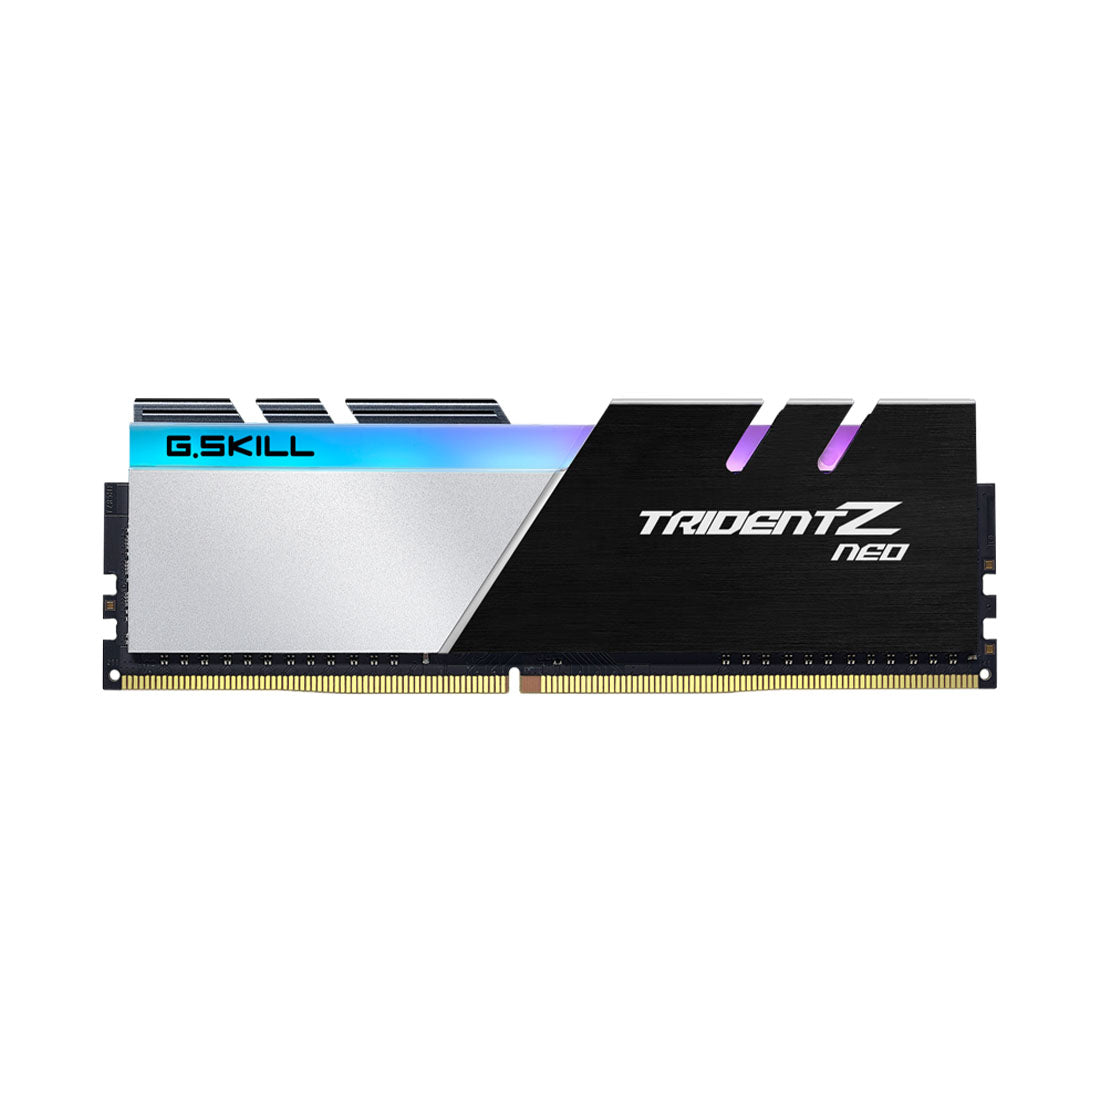 G.SKILL Trident Z Neo RAM 64GB(2x32GB) Dual Channel Kit DDR4 3600MHz Desktop Memory